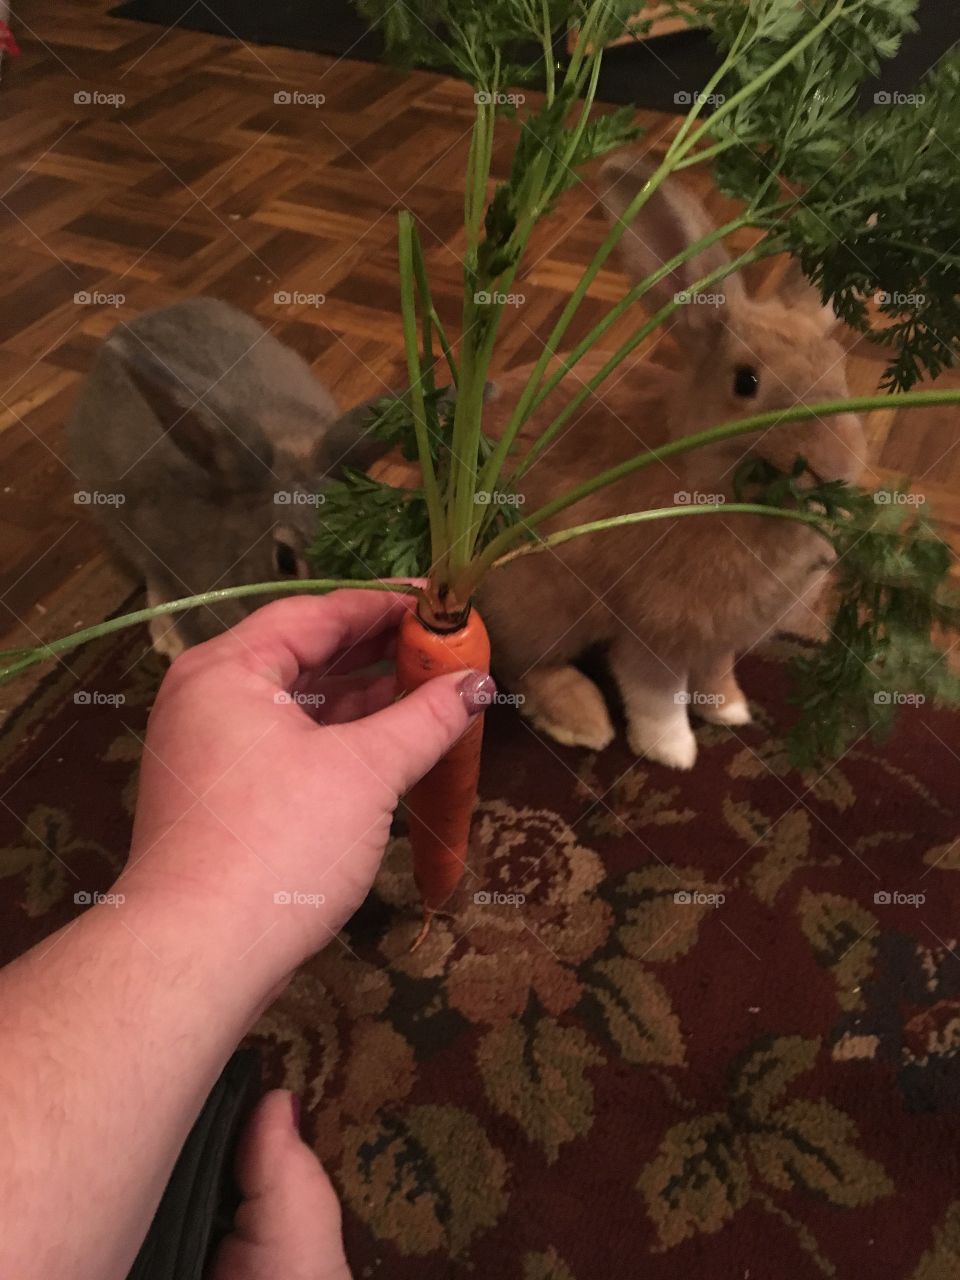 Bunny carrot